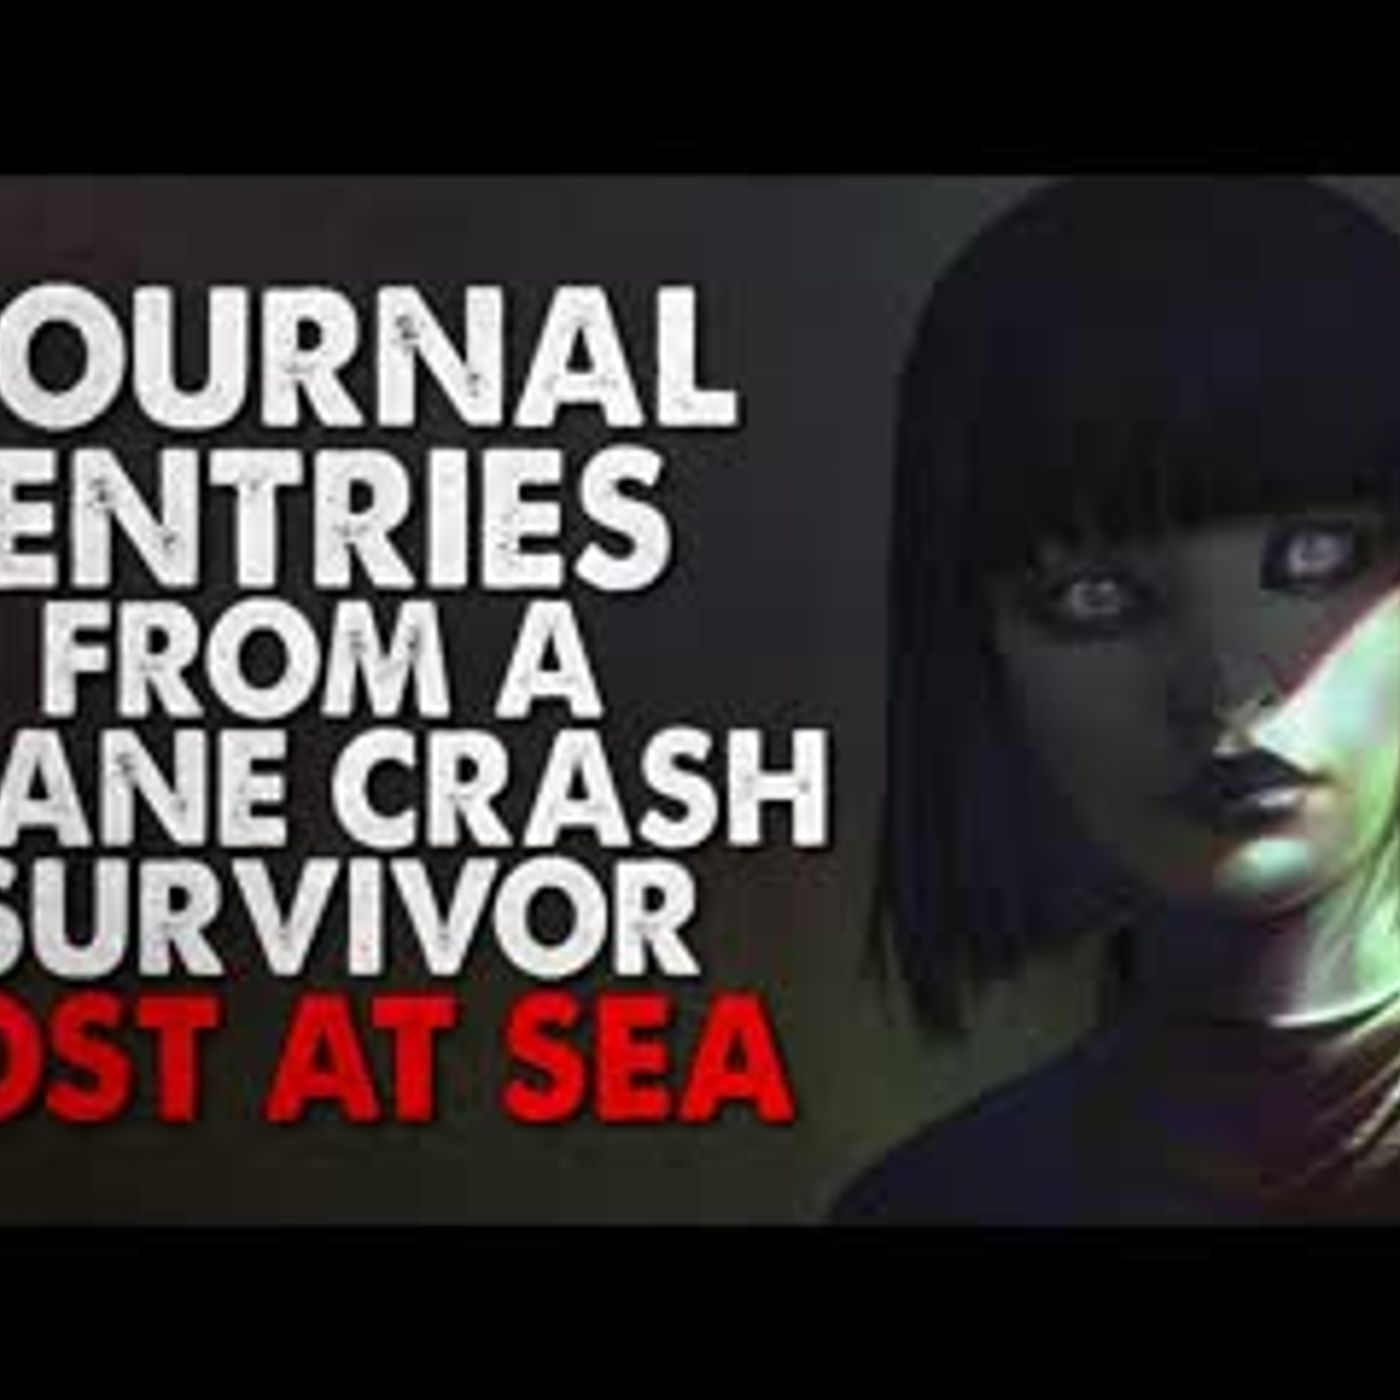 "Journal Entries From a Plane Crash Survivor Lost at Sea" Creepypasta